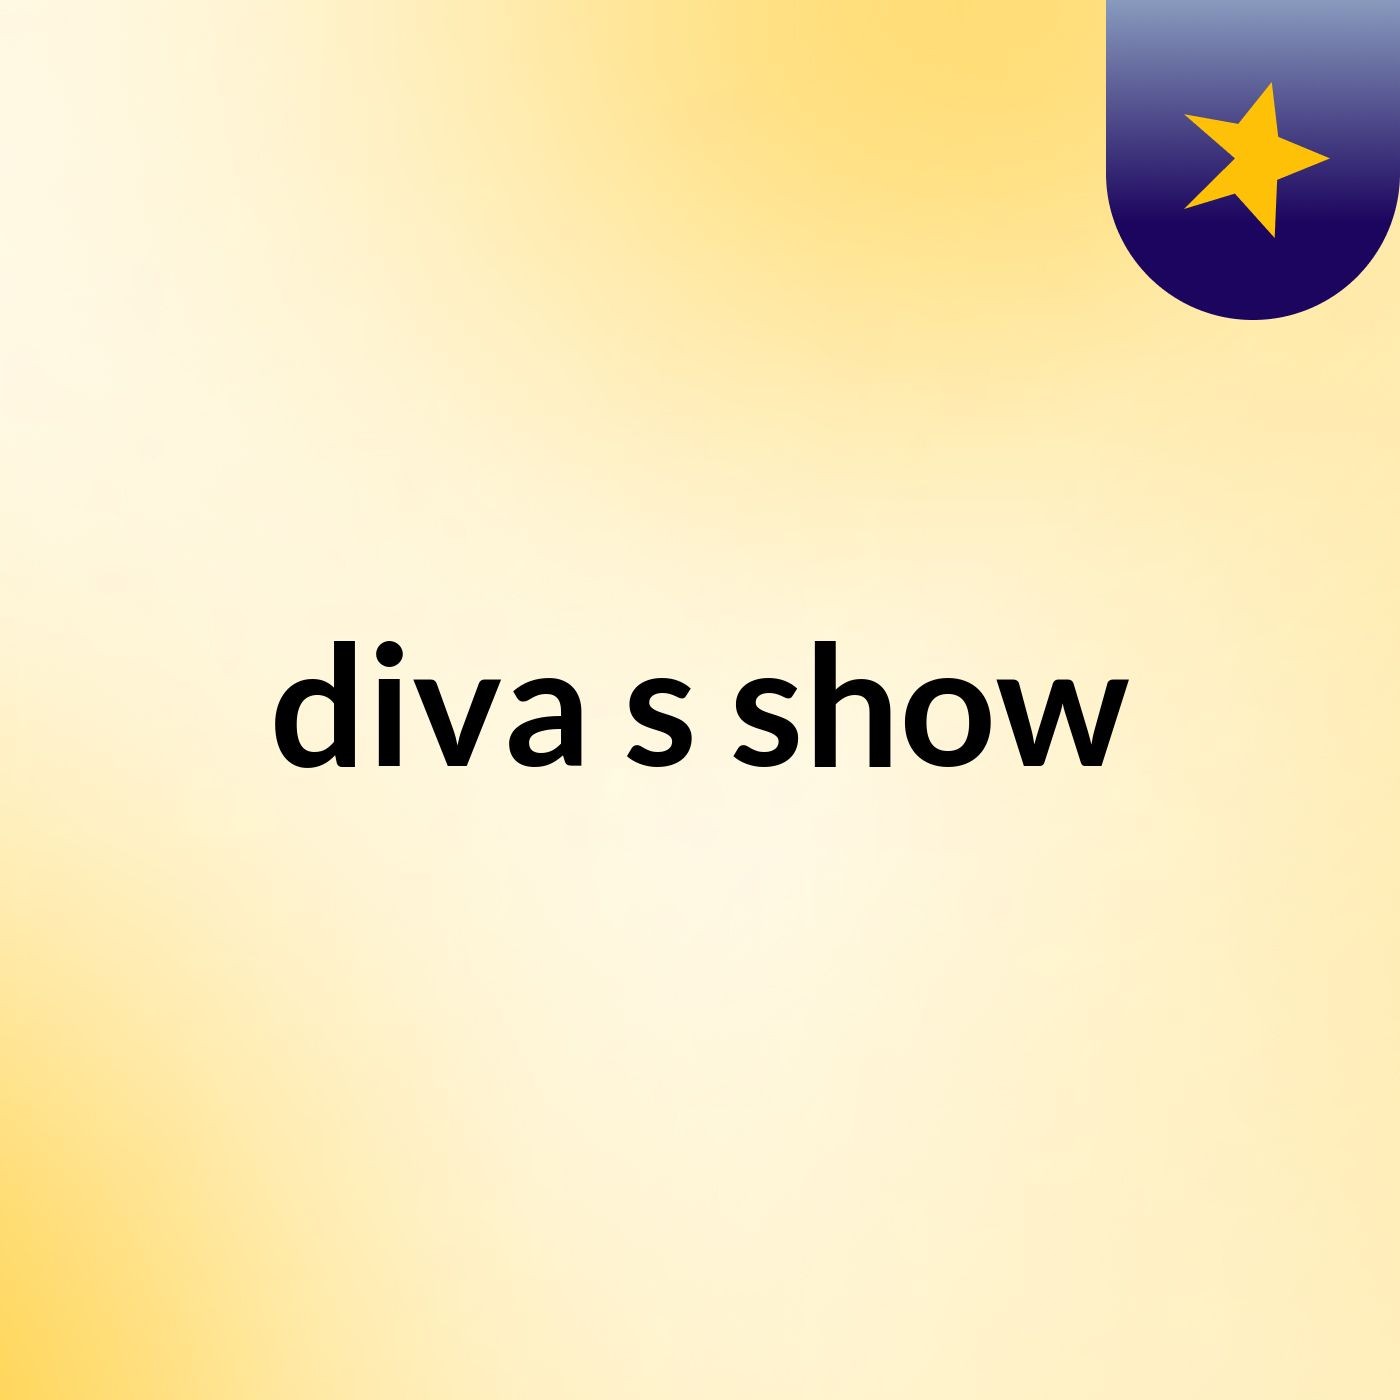 diva's show